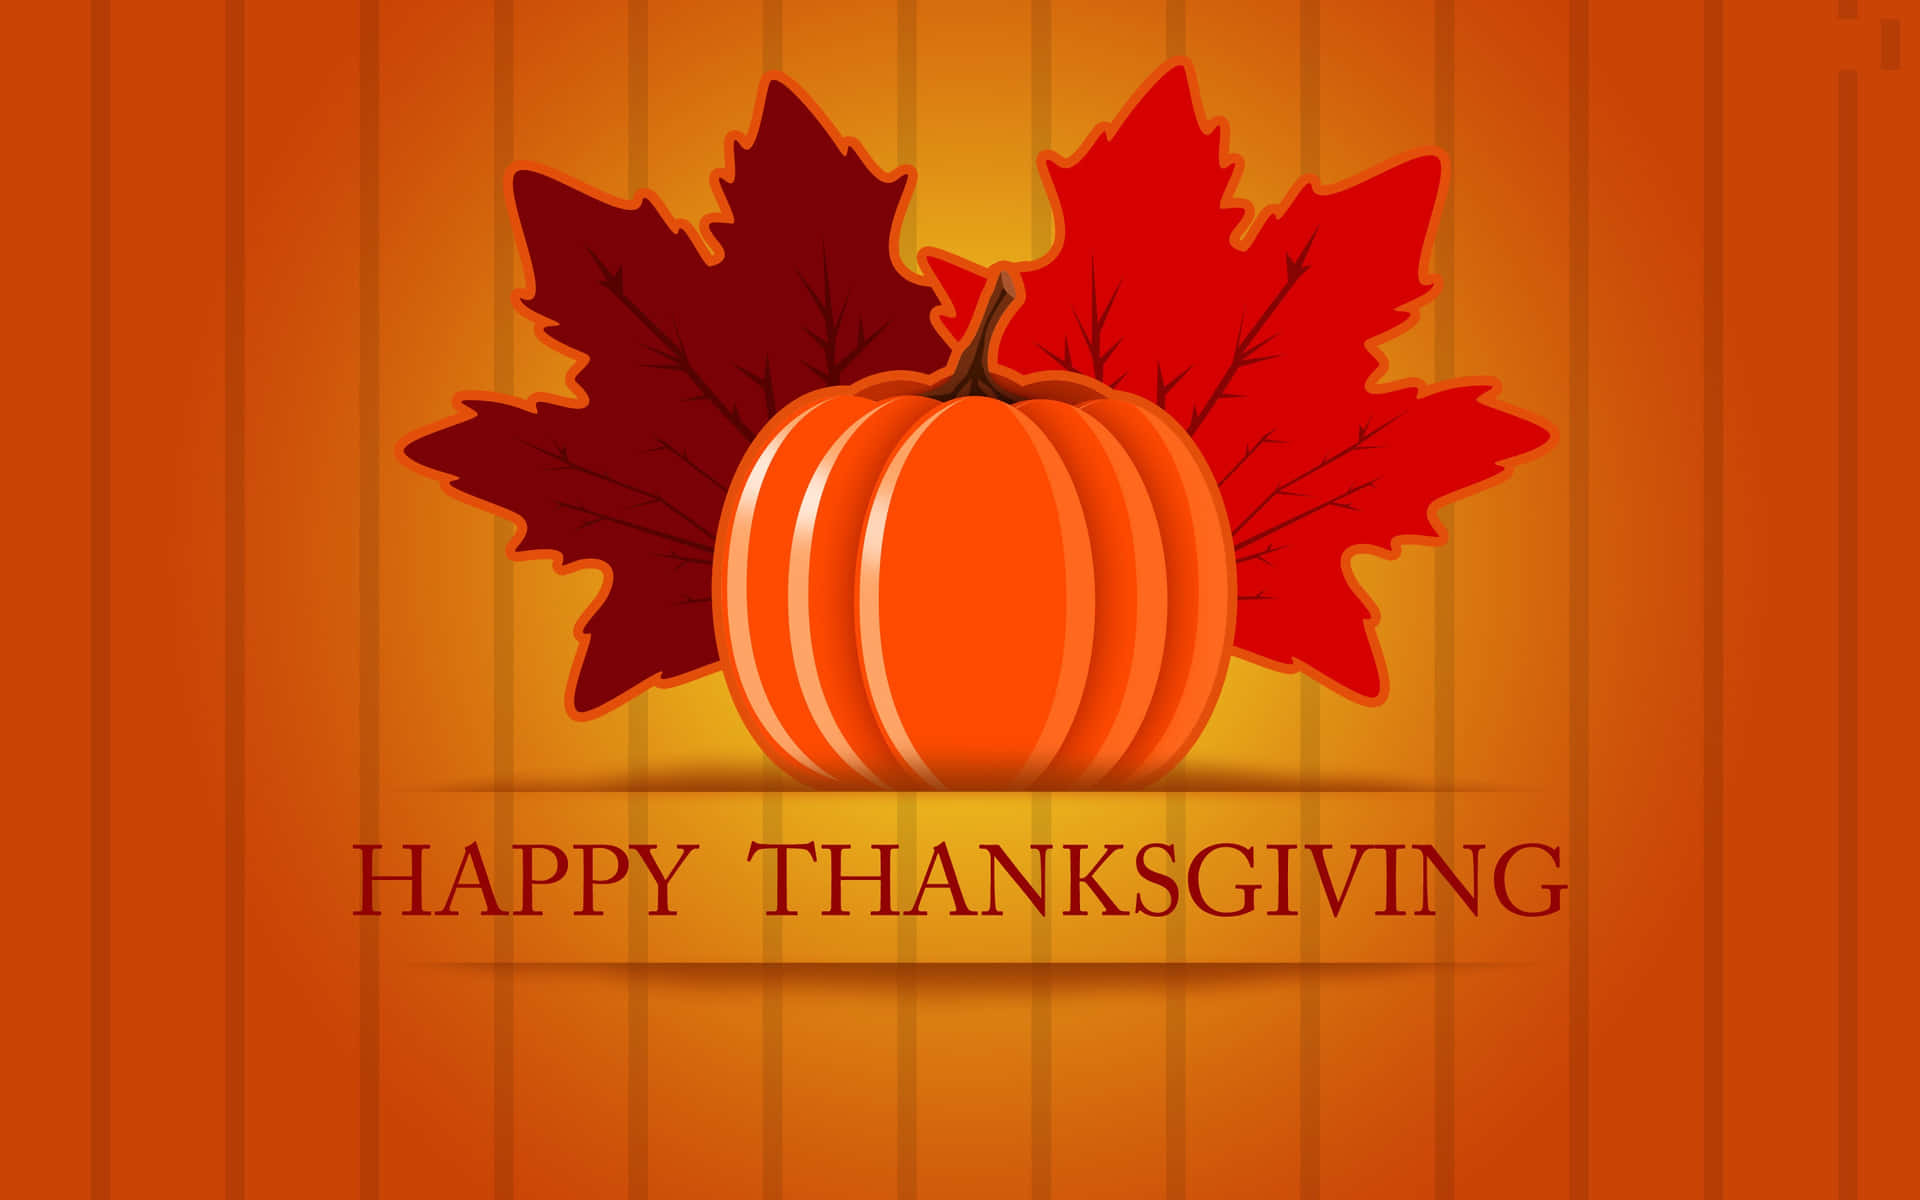 Celebrate a Joyful Thanksgiving